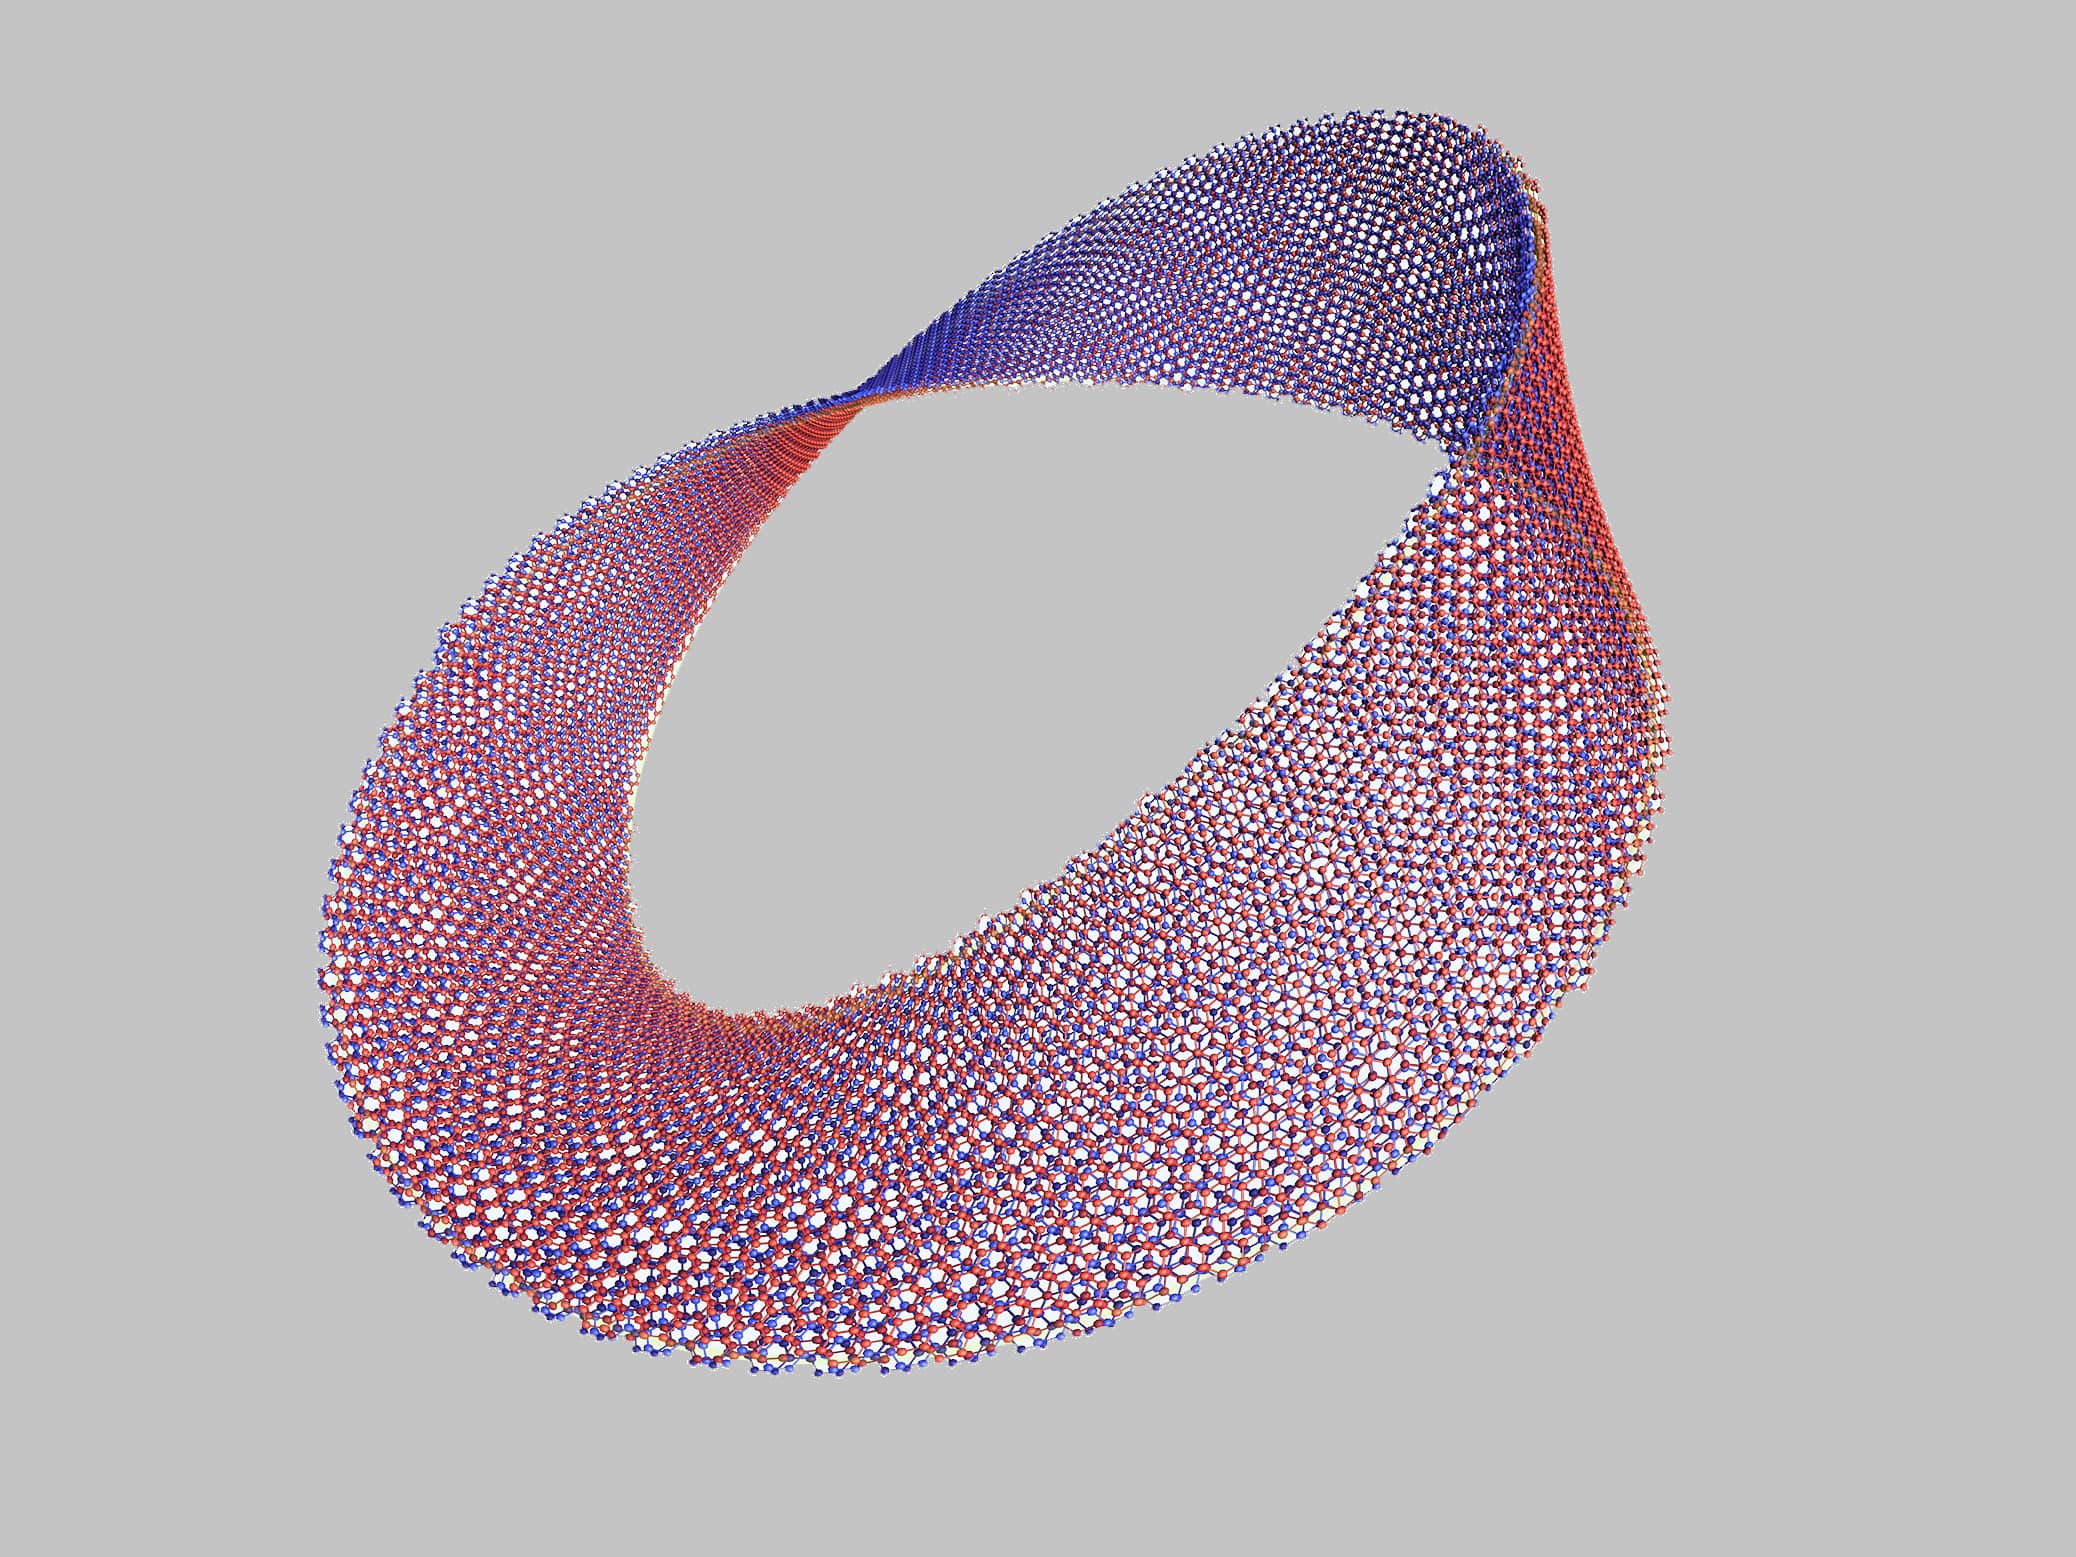 twisted graphene